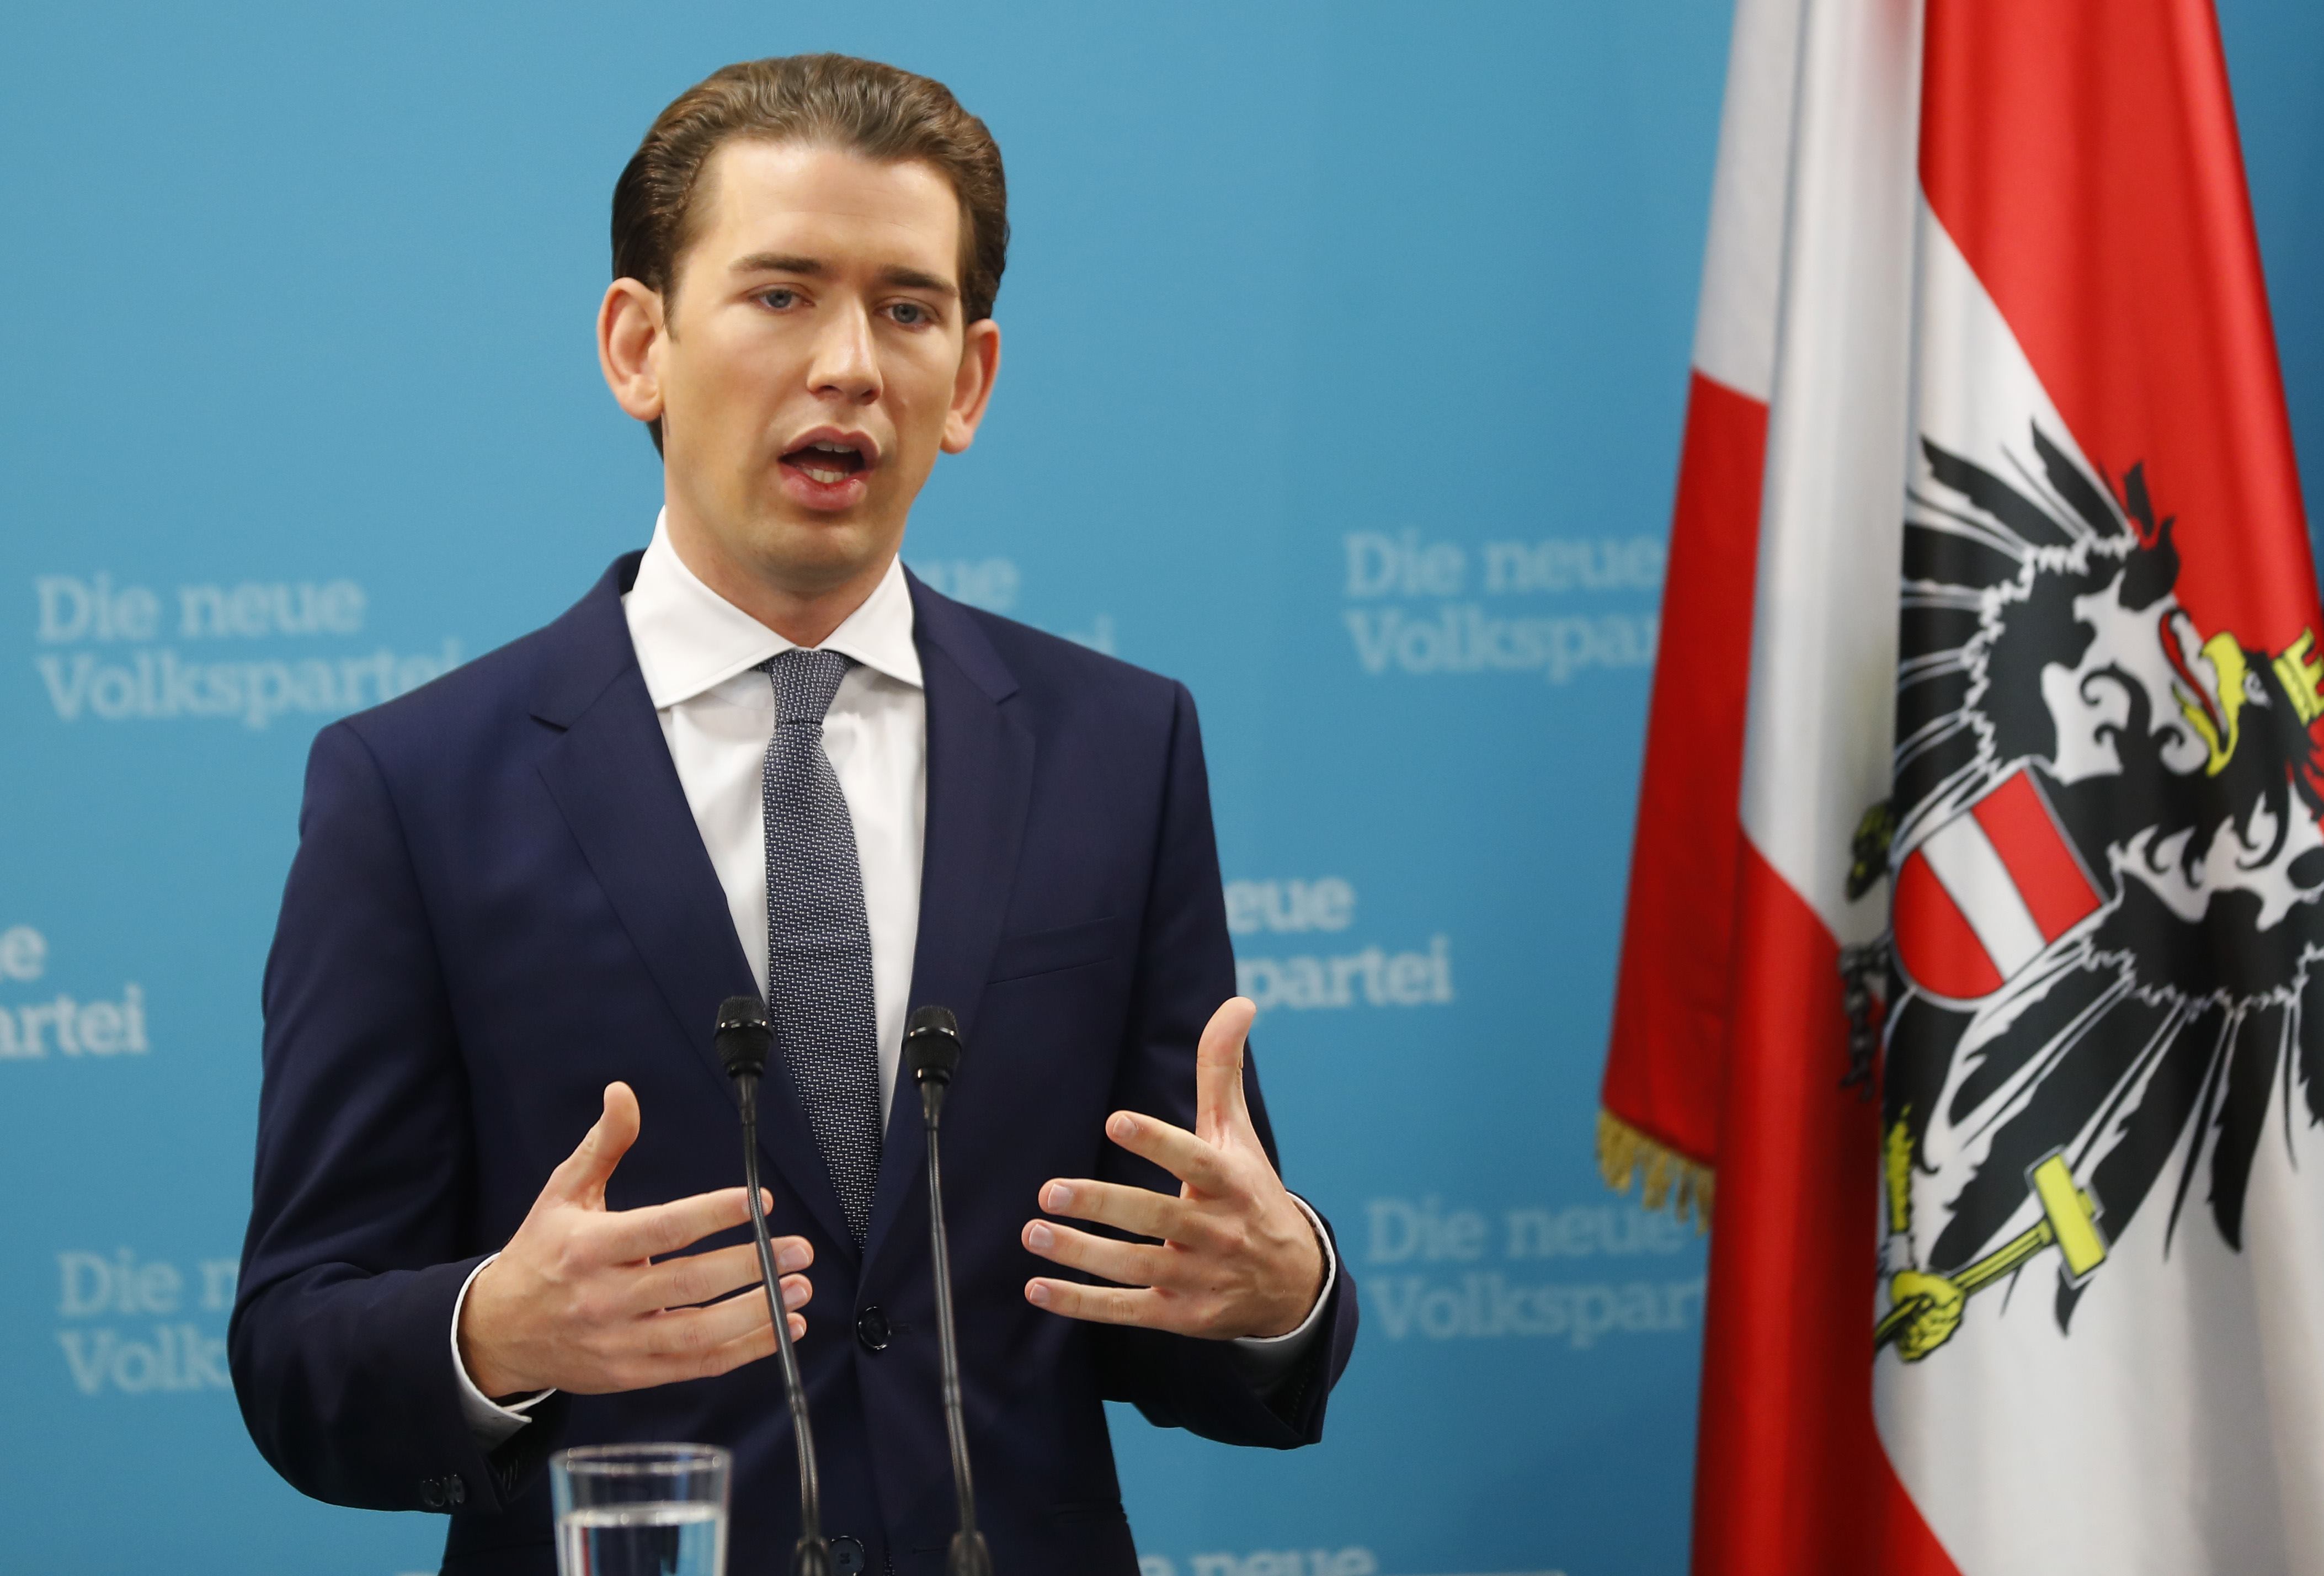 Austrian conservative Kurz plans coalition talks with far right